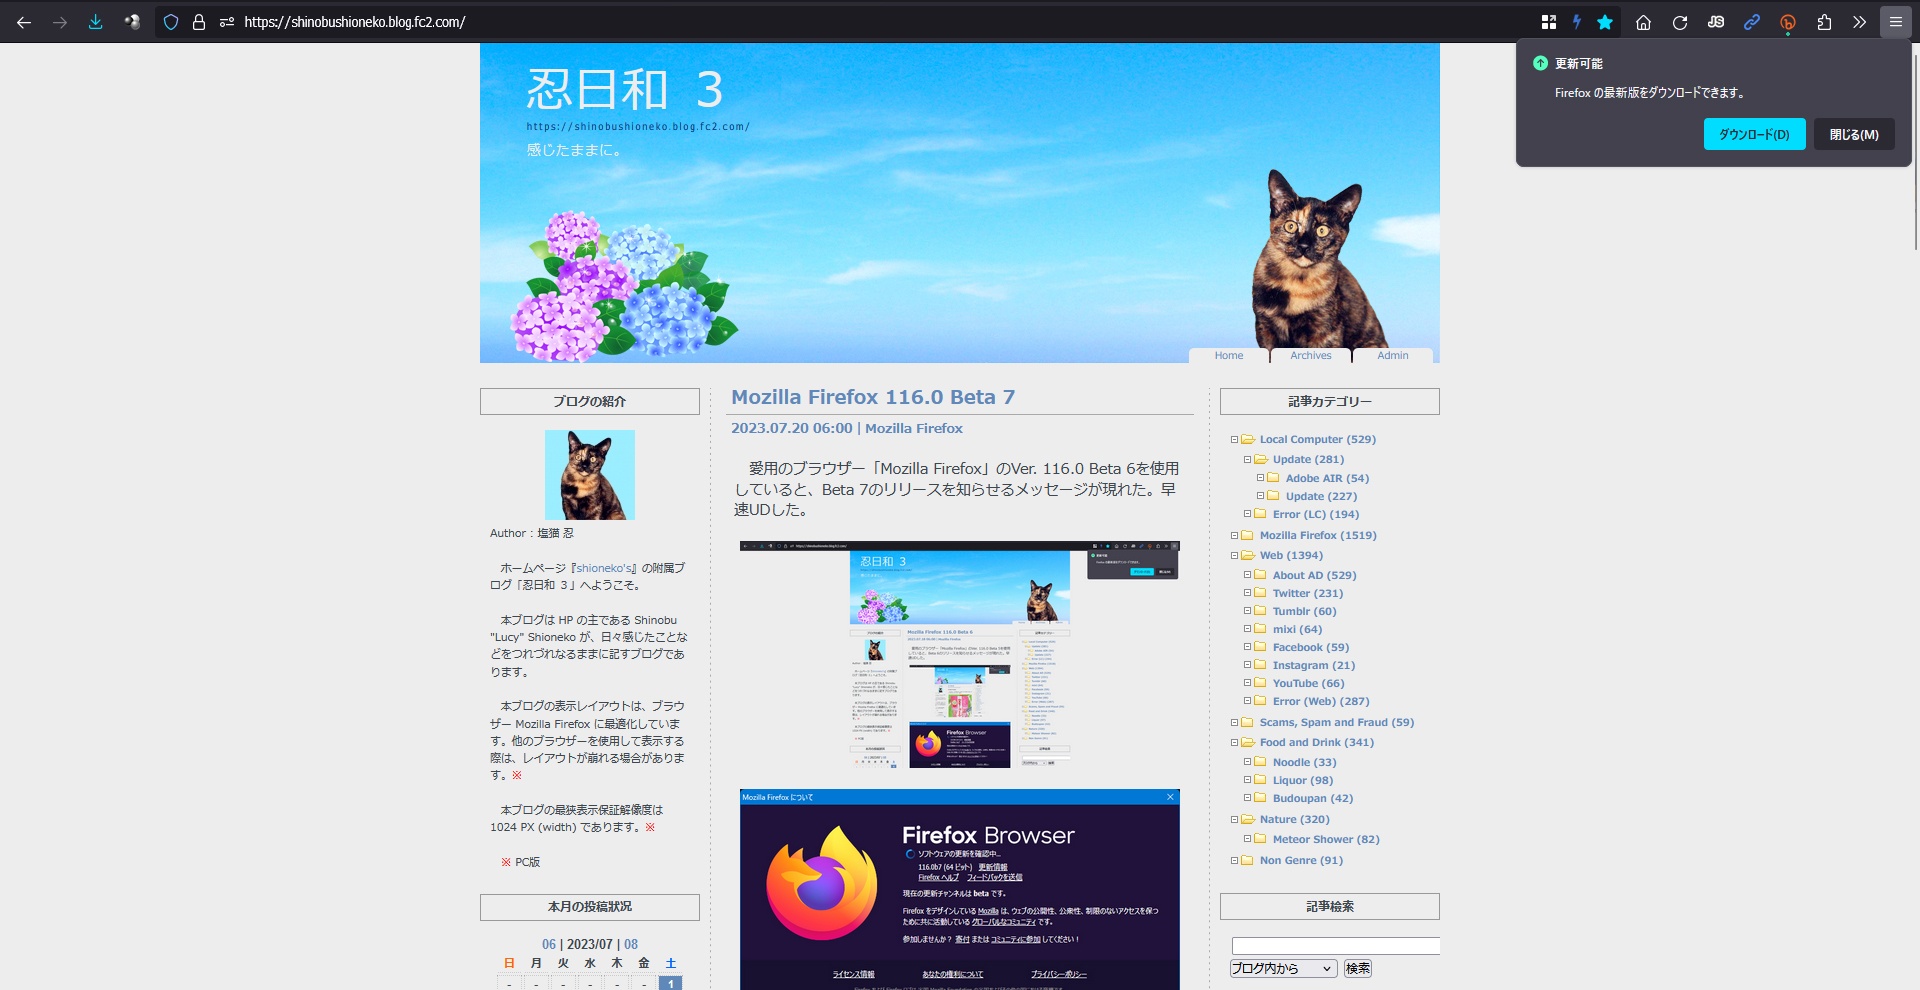 Mozilla Firefox 116.0 Beta 8